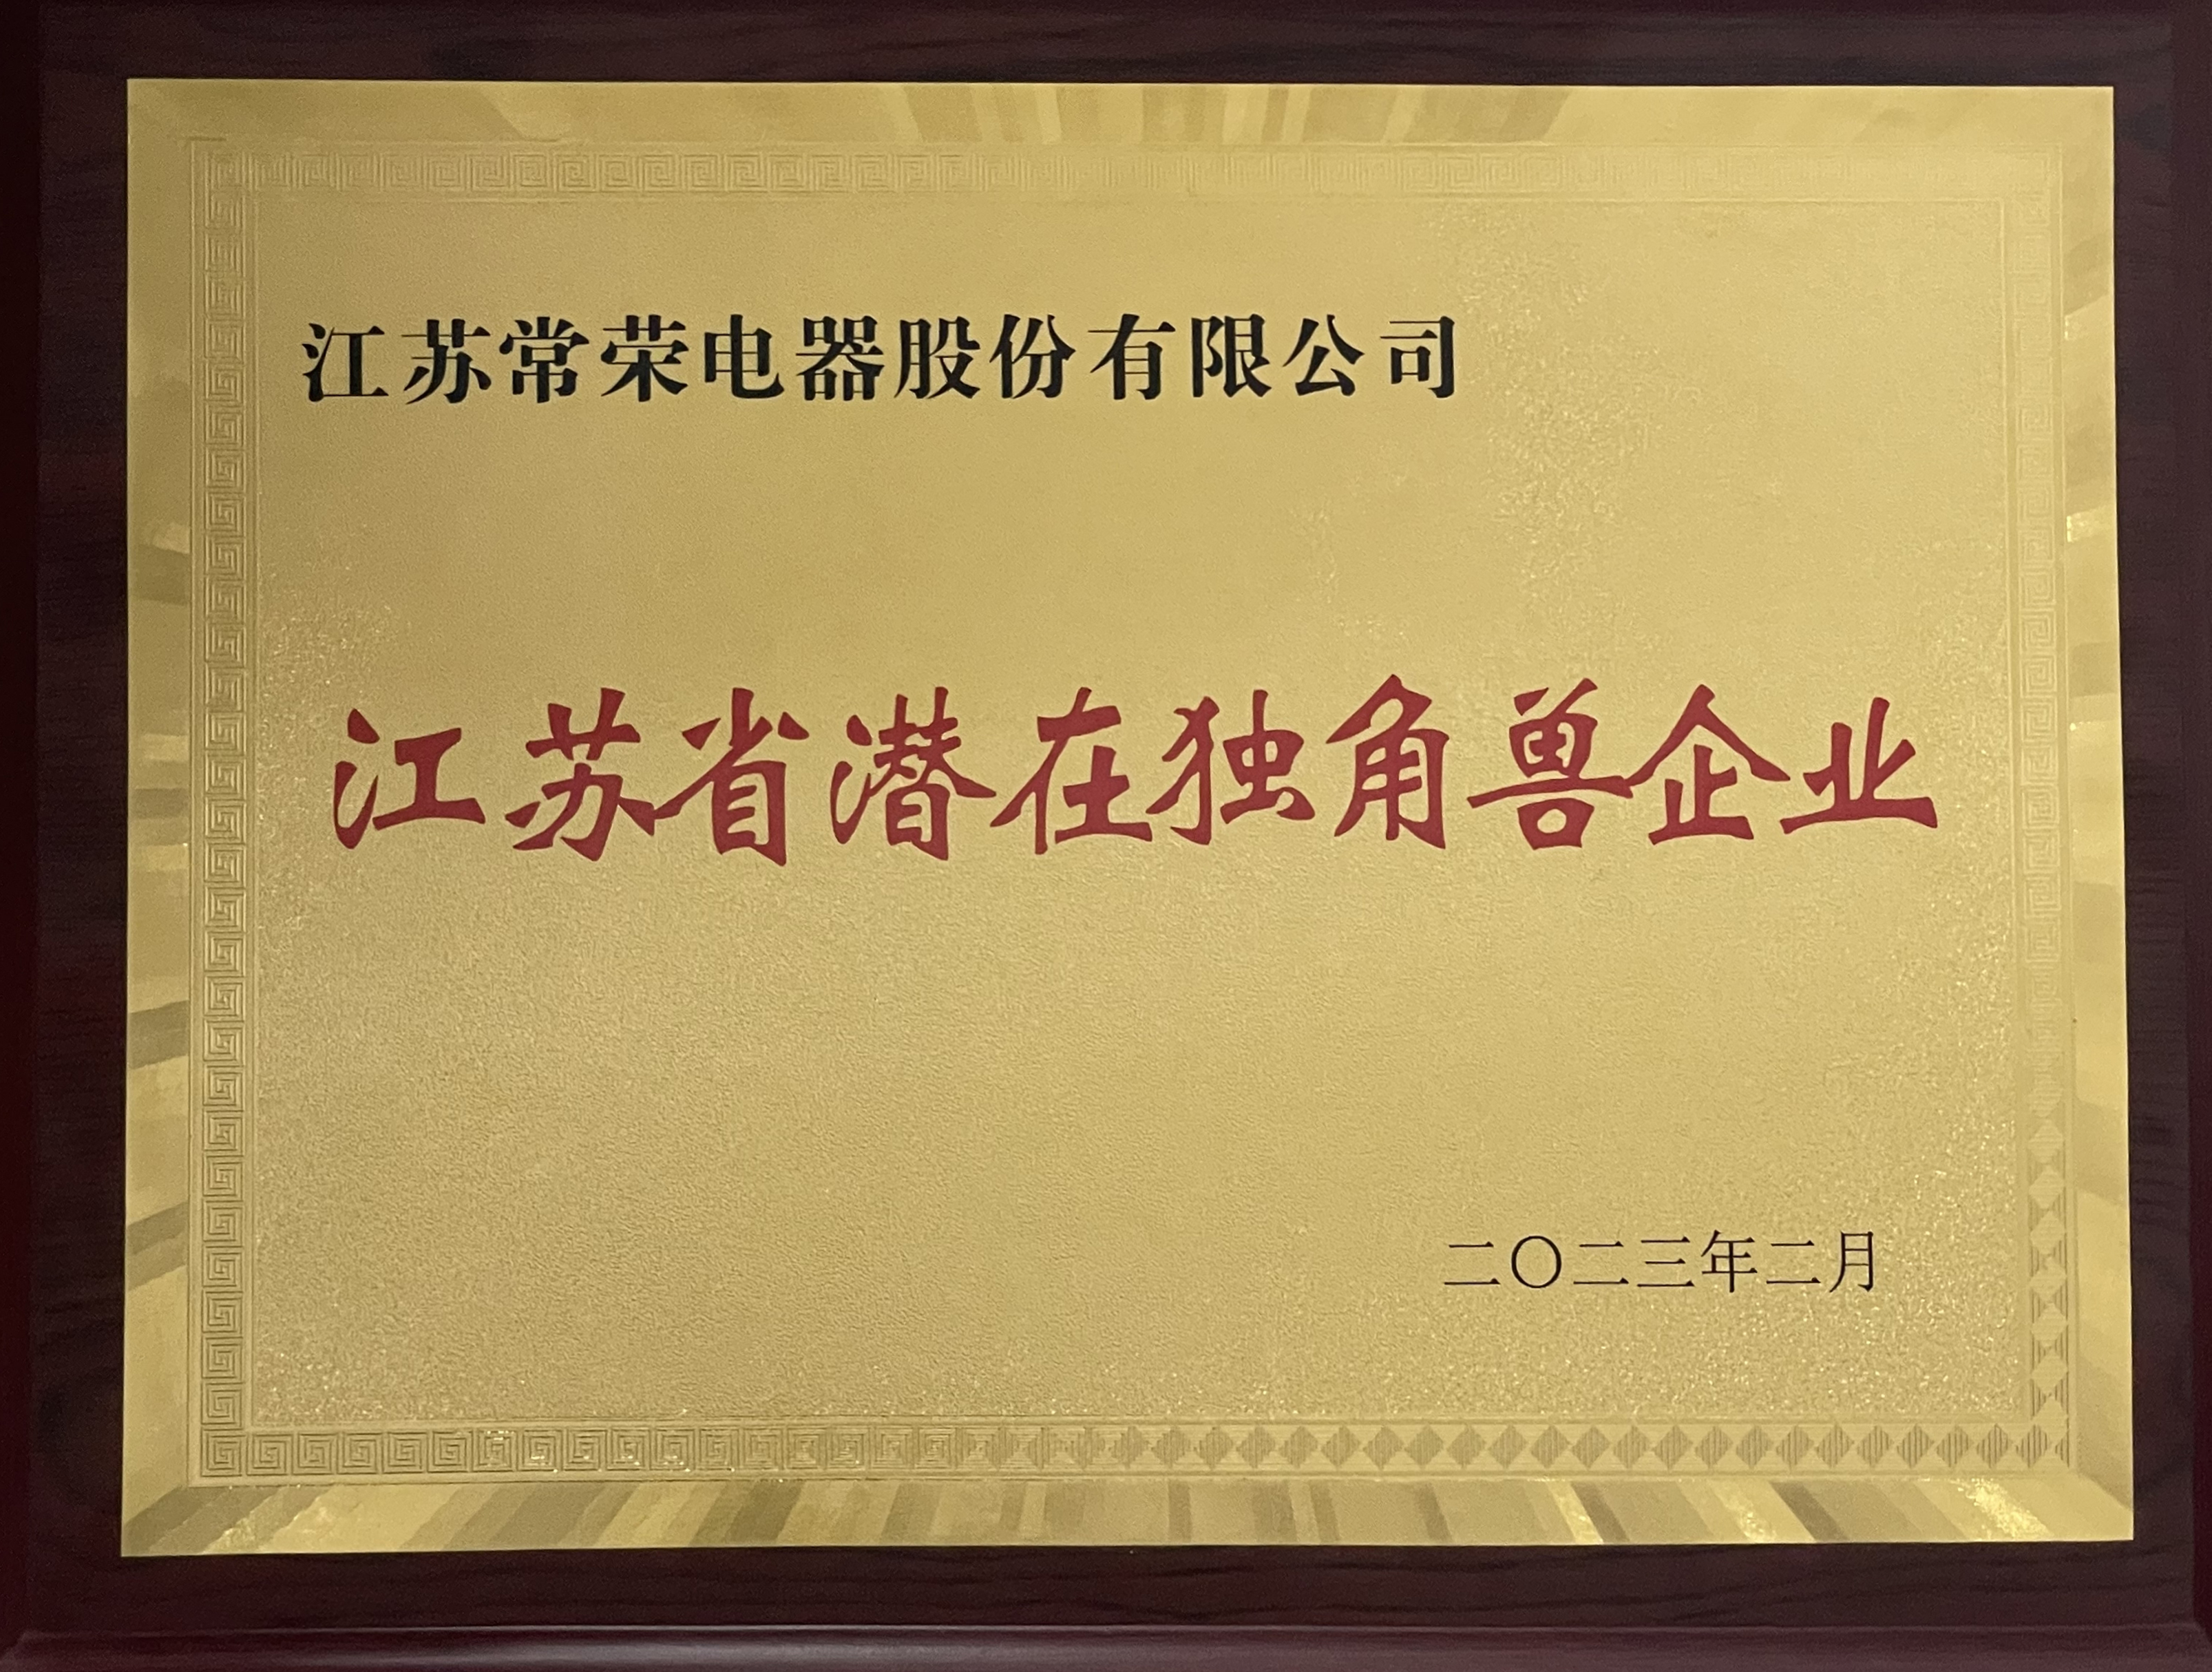 Medal: Potential Unicorn Enterprise in Jiangsu Province